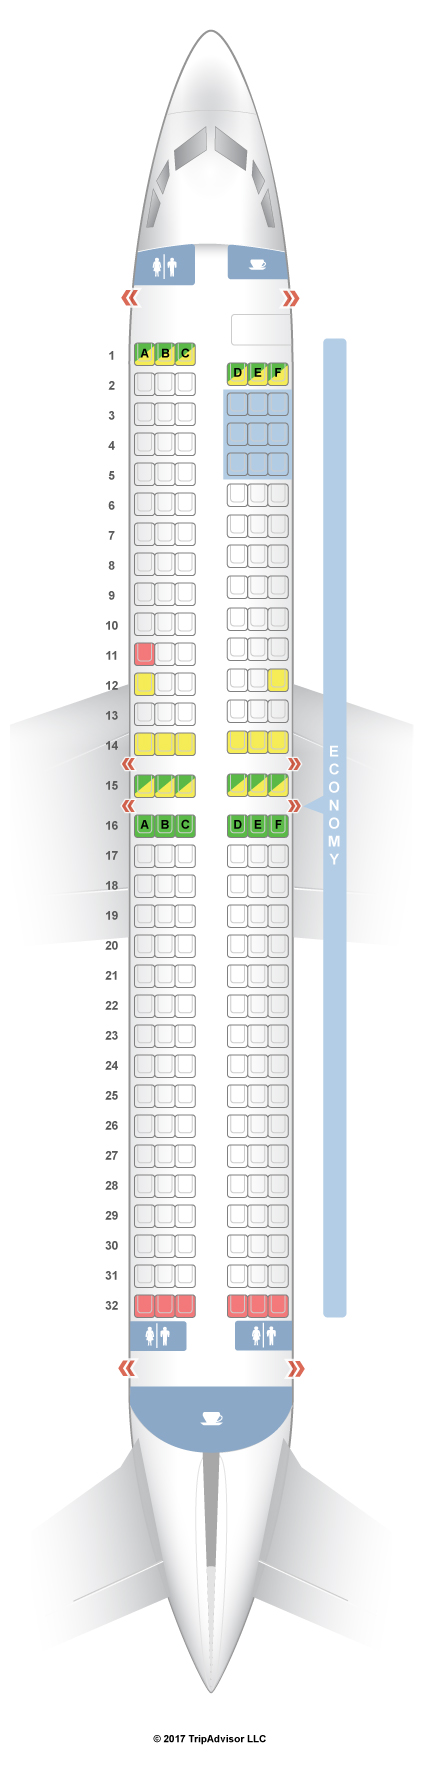 Easyjet Plane Seating Chart